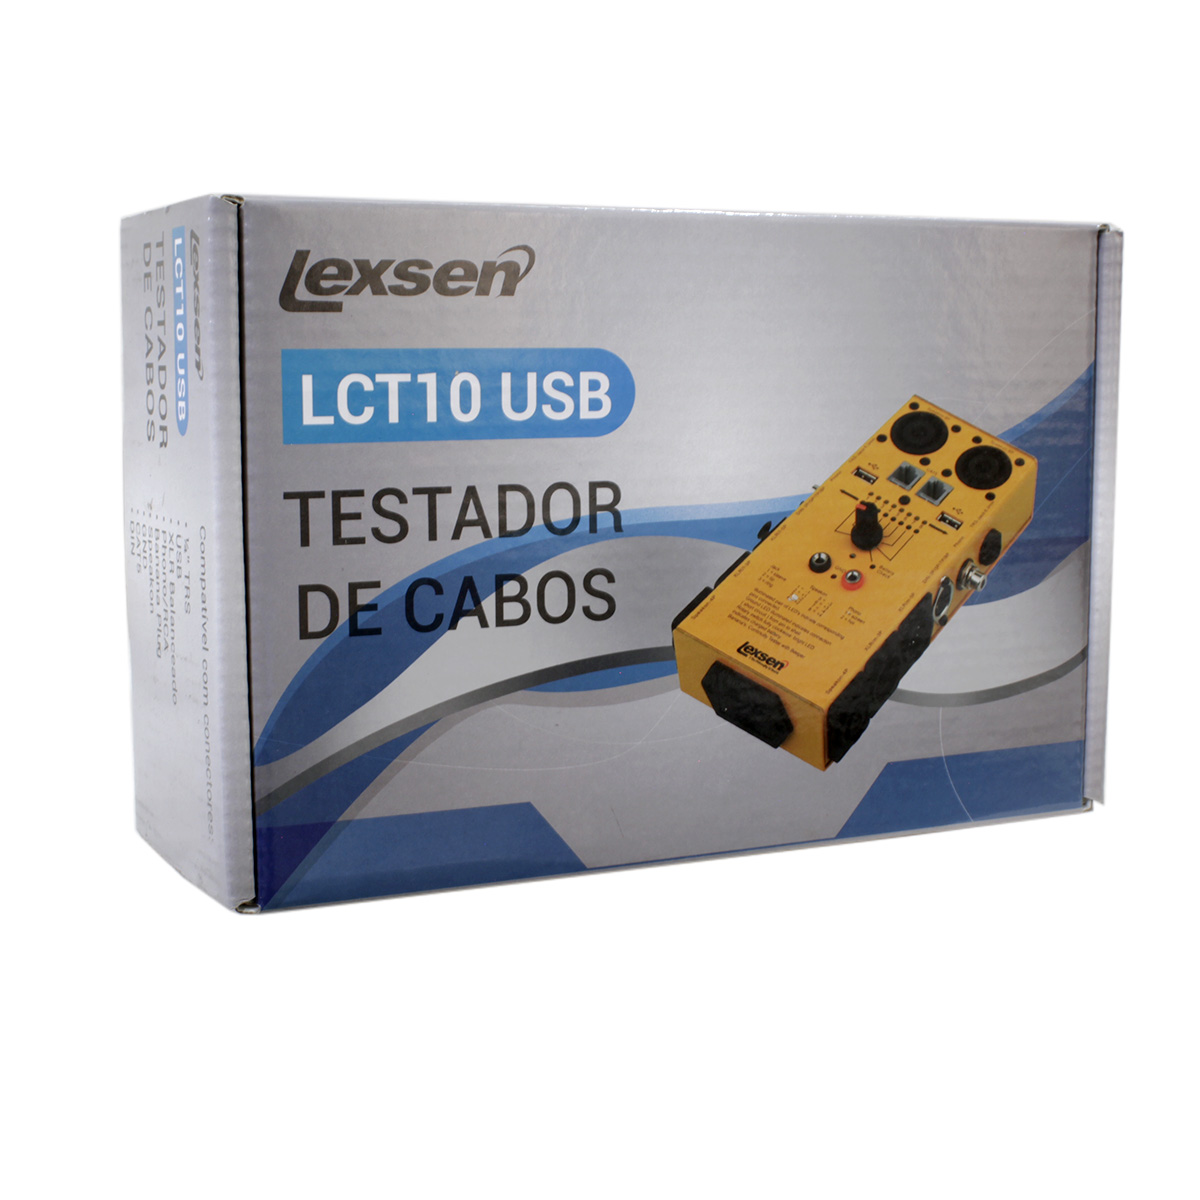 Testador de Cabos com 10 conectores LEXSEN LCT10USB